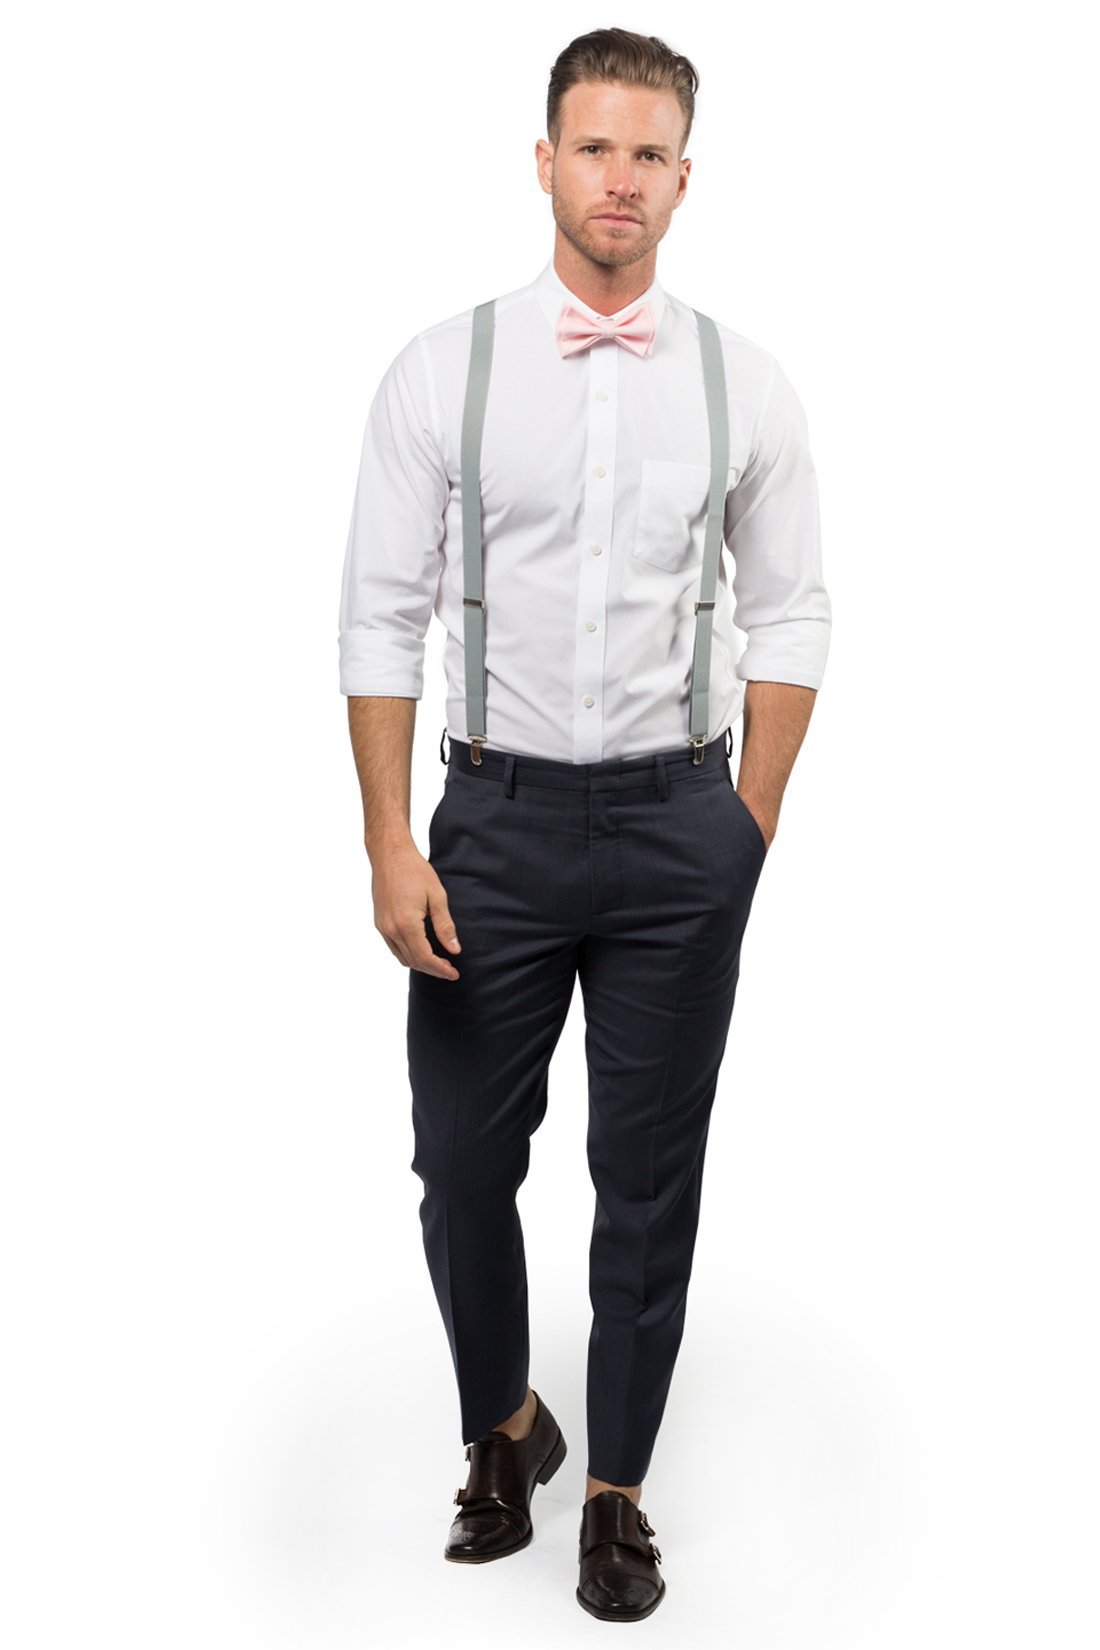 Light Gray Suspenders & Blush Bow Tie